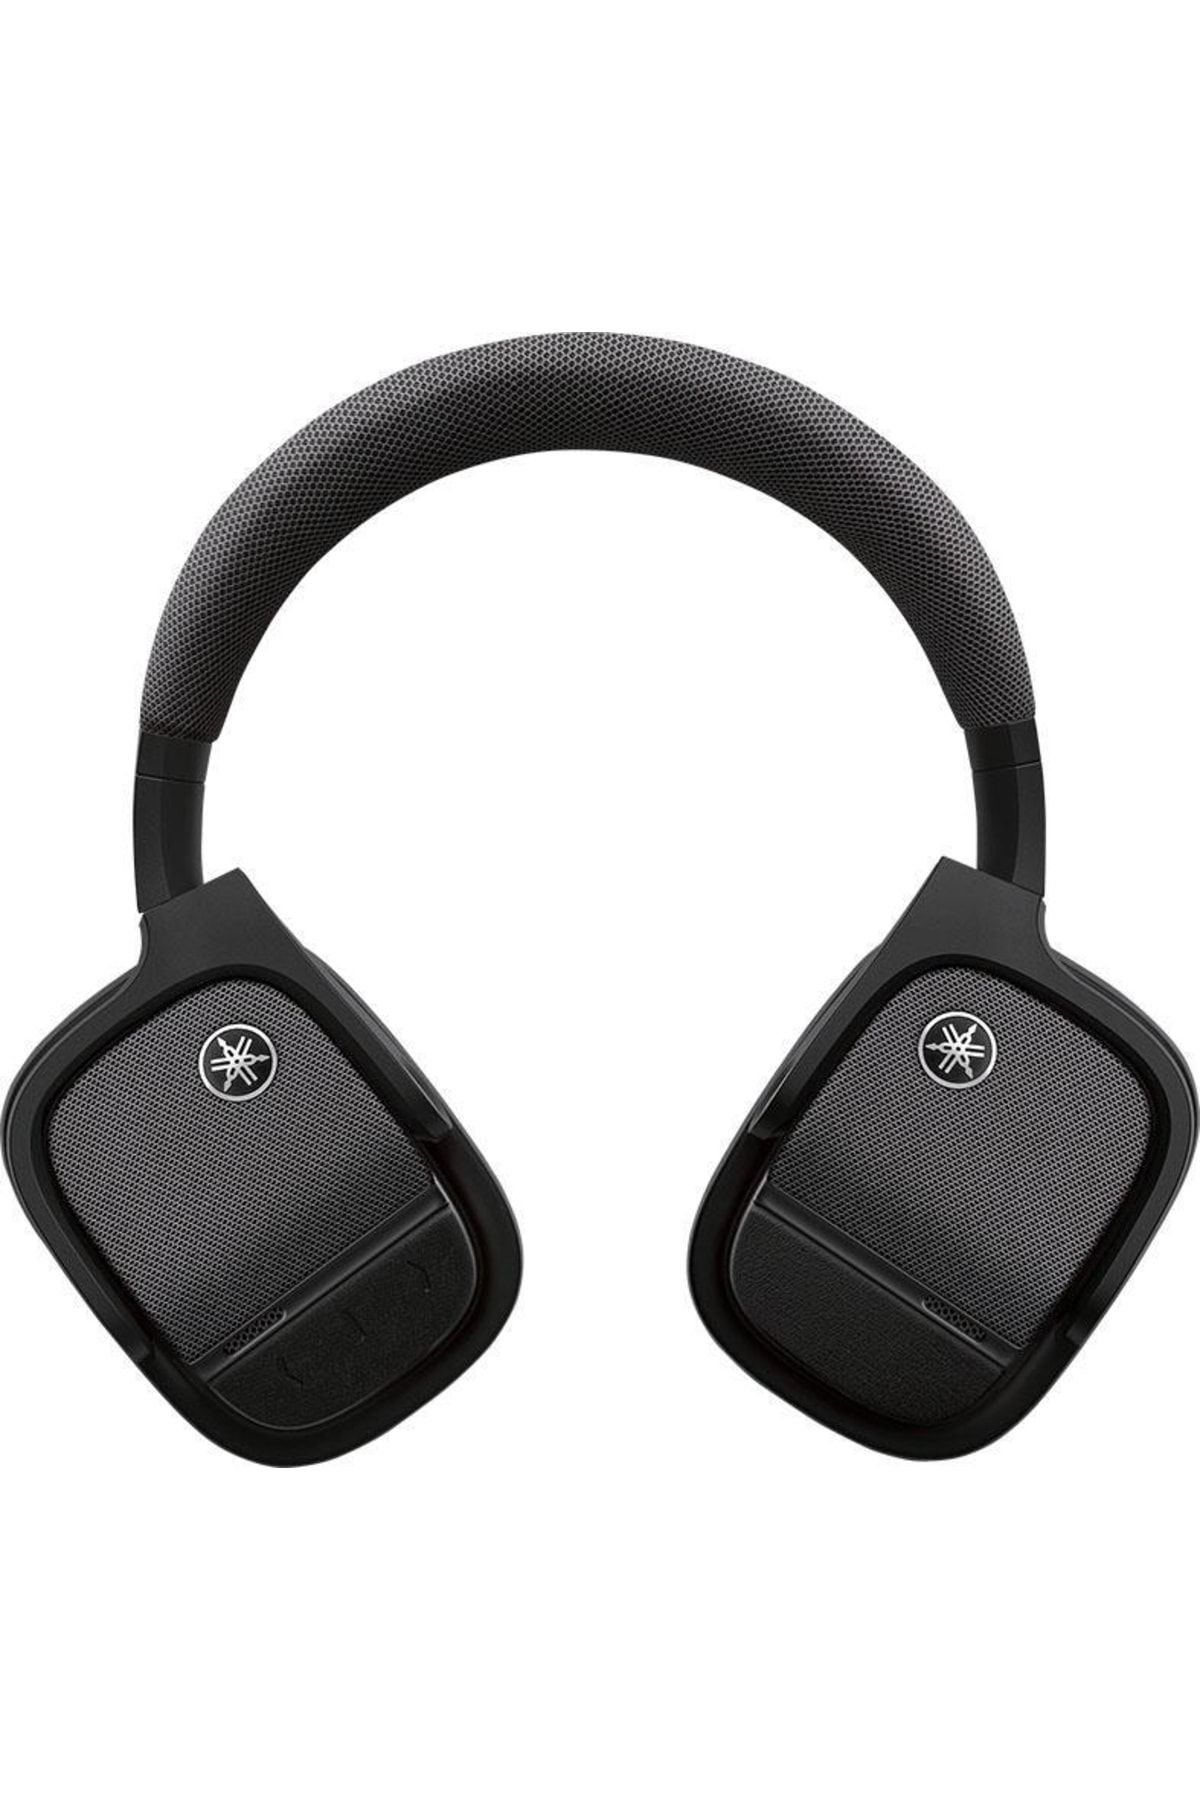 Yamaha Yh-l700a 3d Ses Alanı, Gelişmiş Anc Kulak Üstü Kulaklık